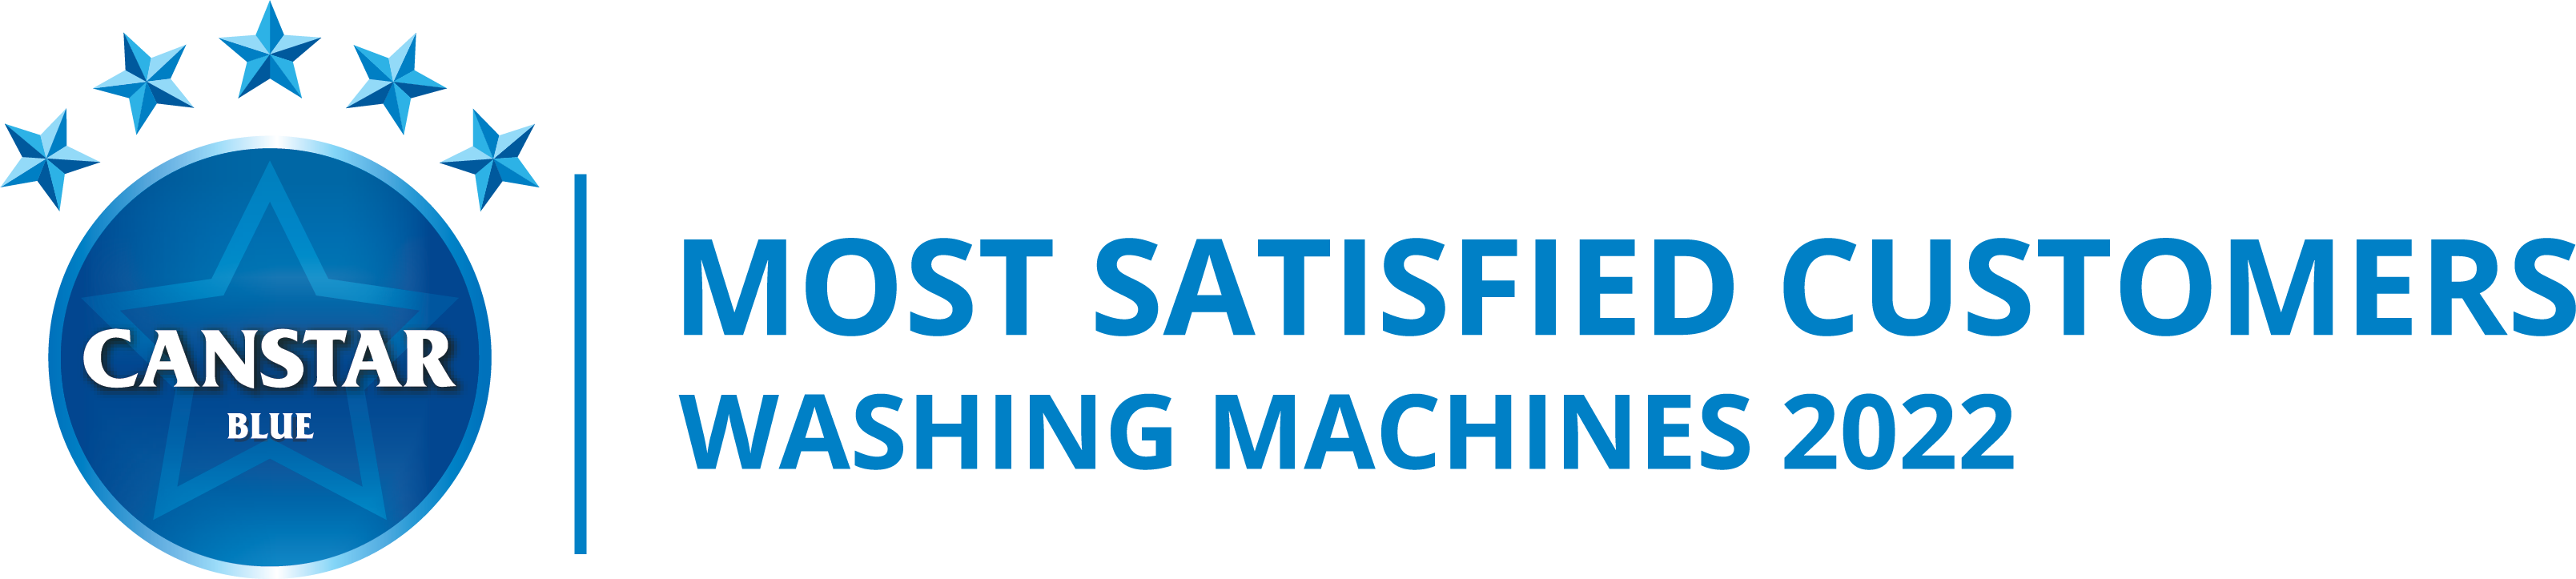 MSC washing machines wide logo